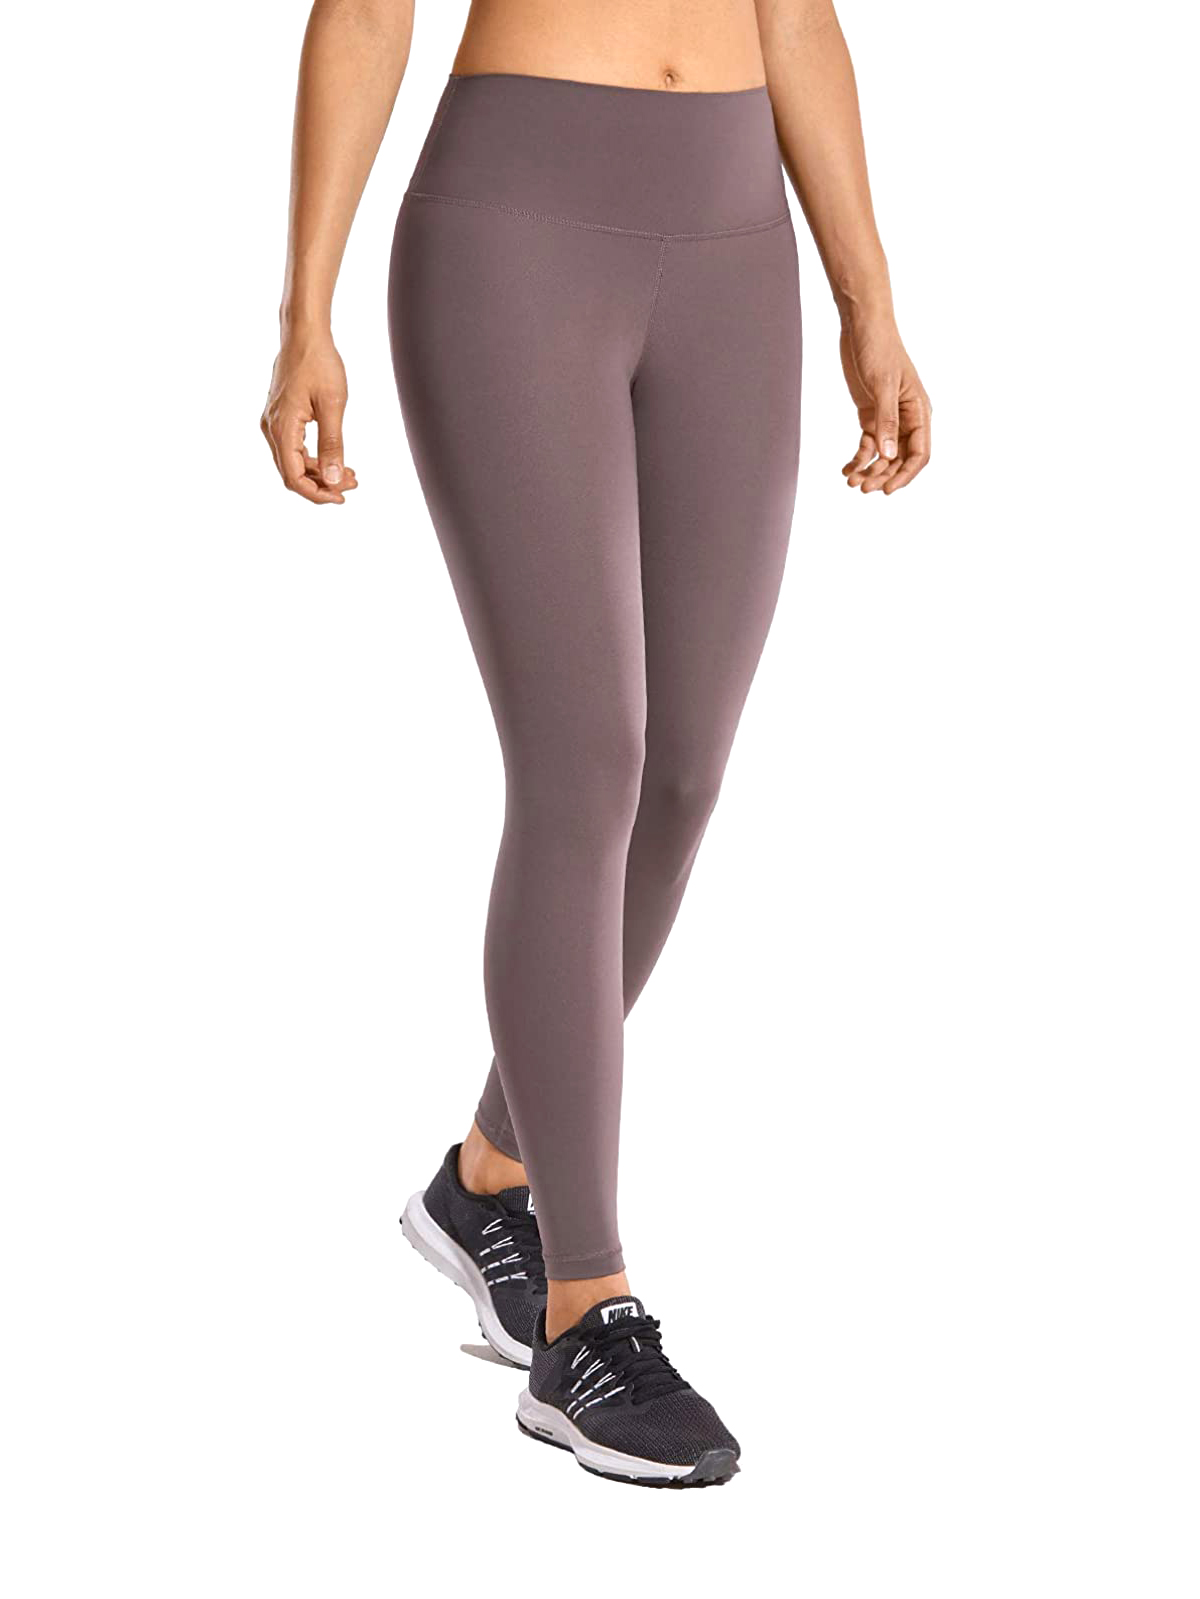 Homma Tummy Control Biker Shorts for Women High Waist Seamless Workout  Running Shorts Athletic Compression Gym Yoga Shorts